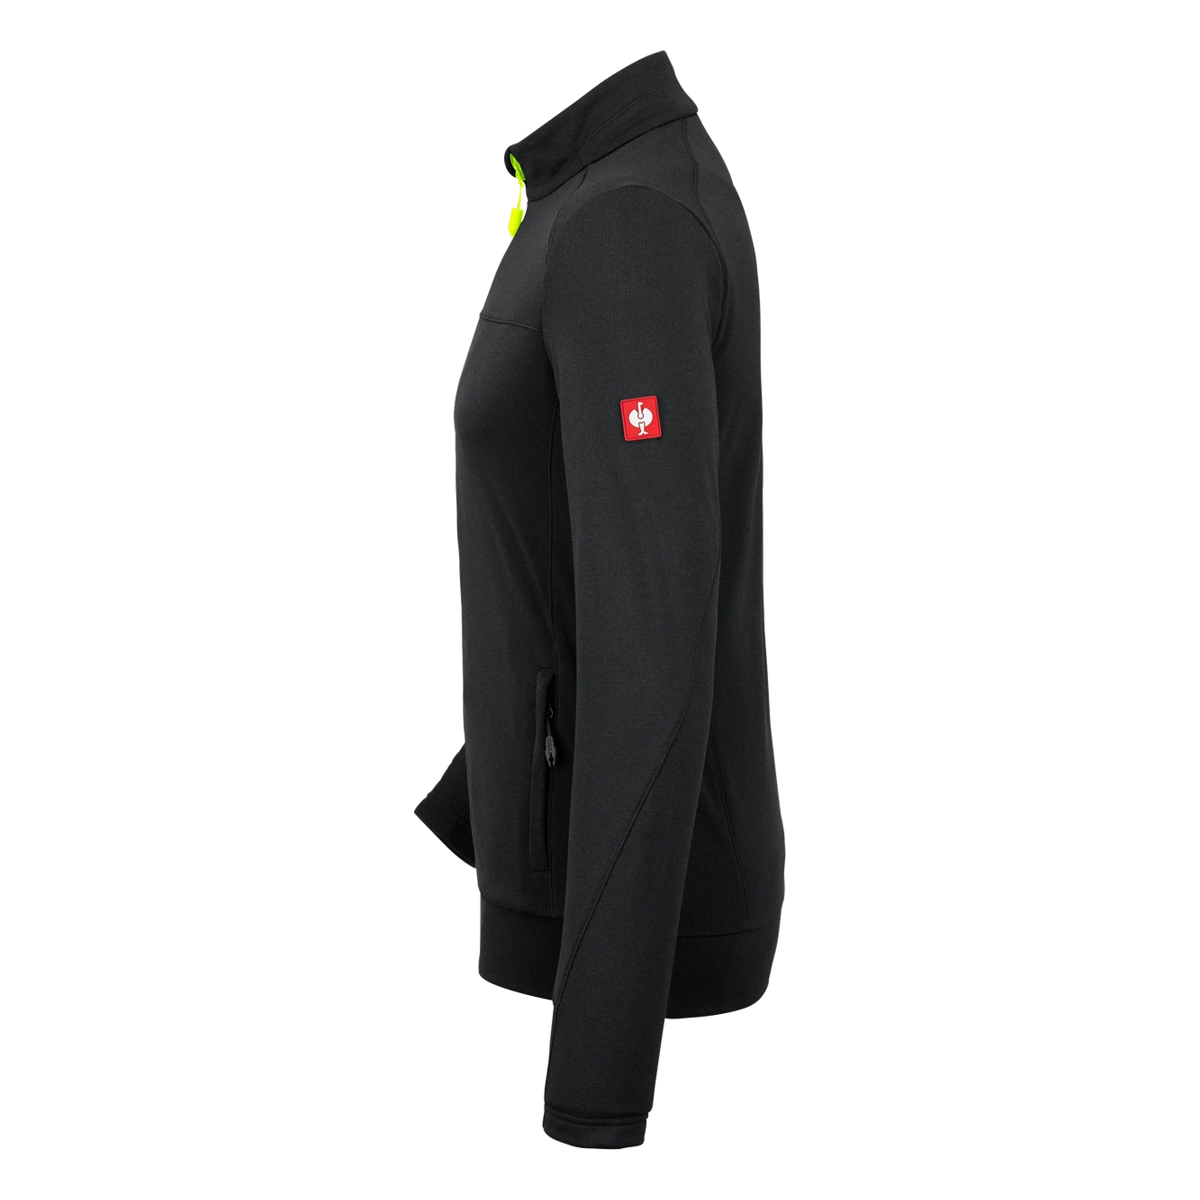 engelbert strauss FIBERTWIN® clima-pro jacket e.s.motion 2020 German Workwear